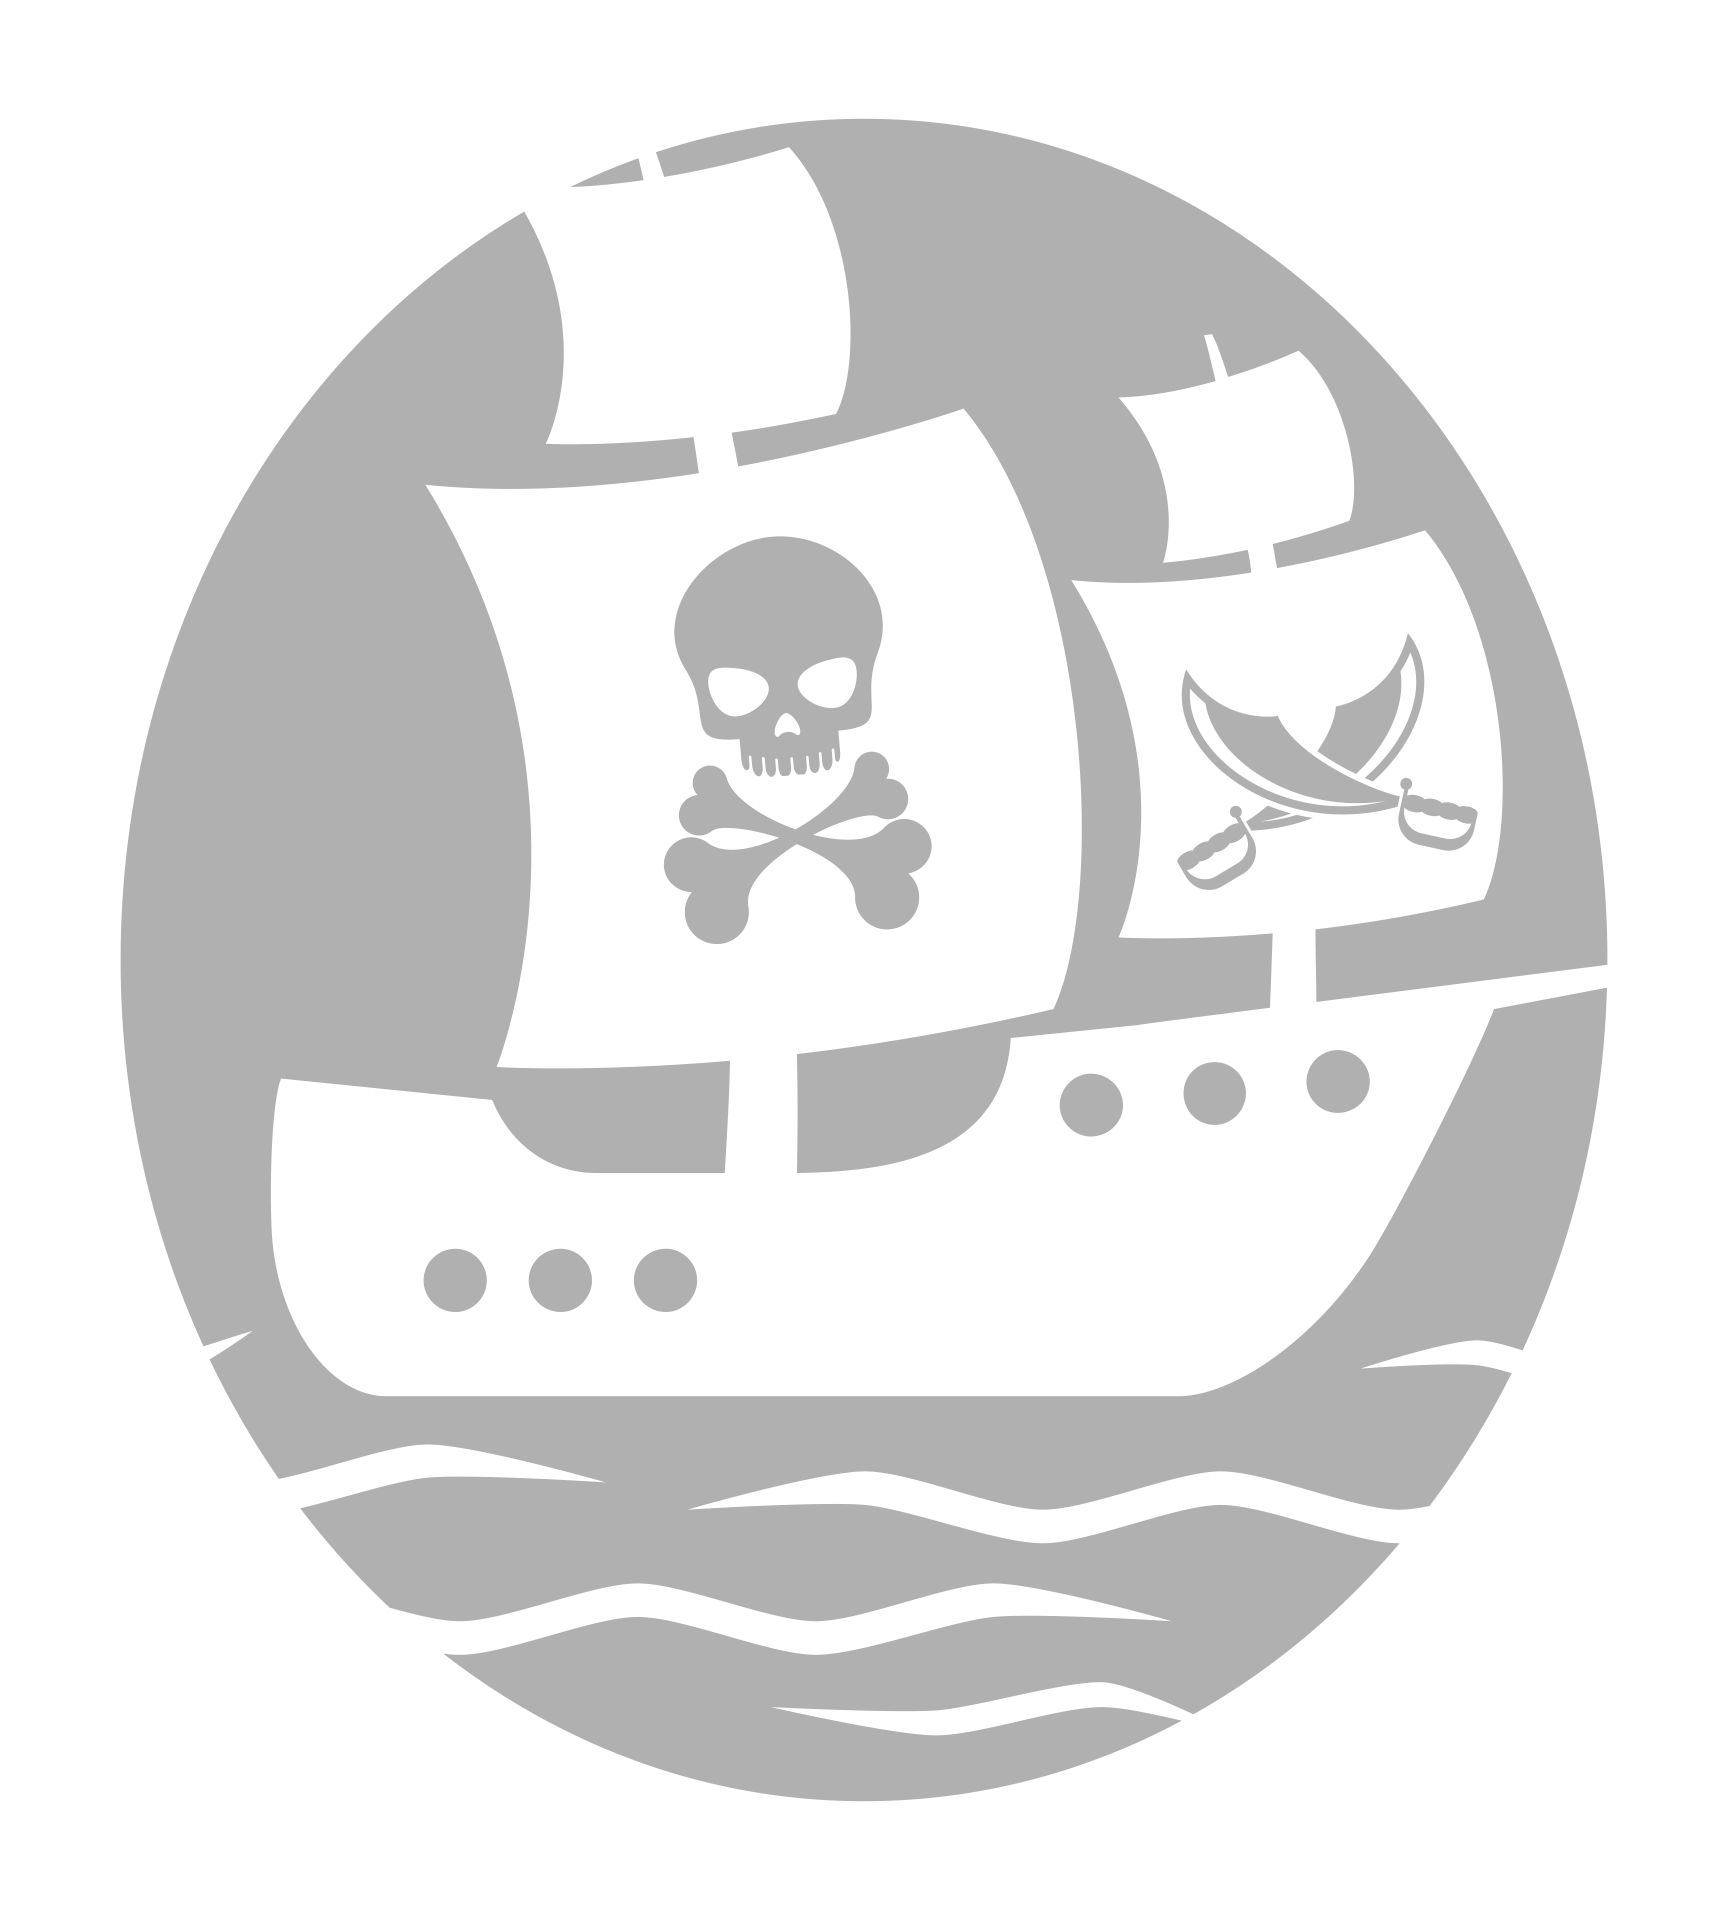 pirate ship pumpkin pattern